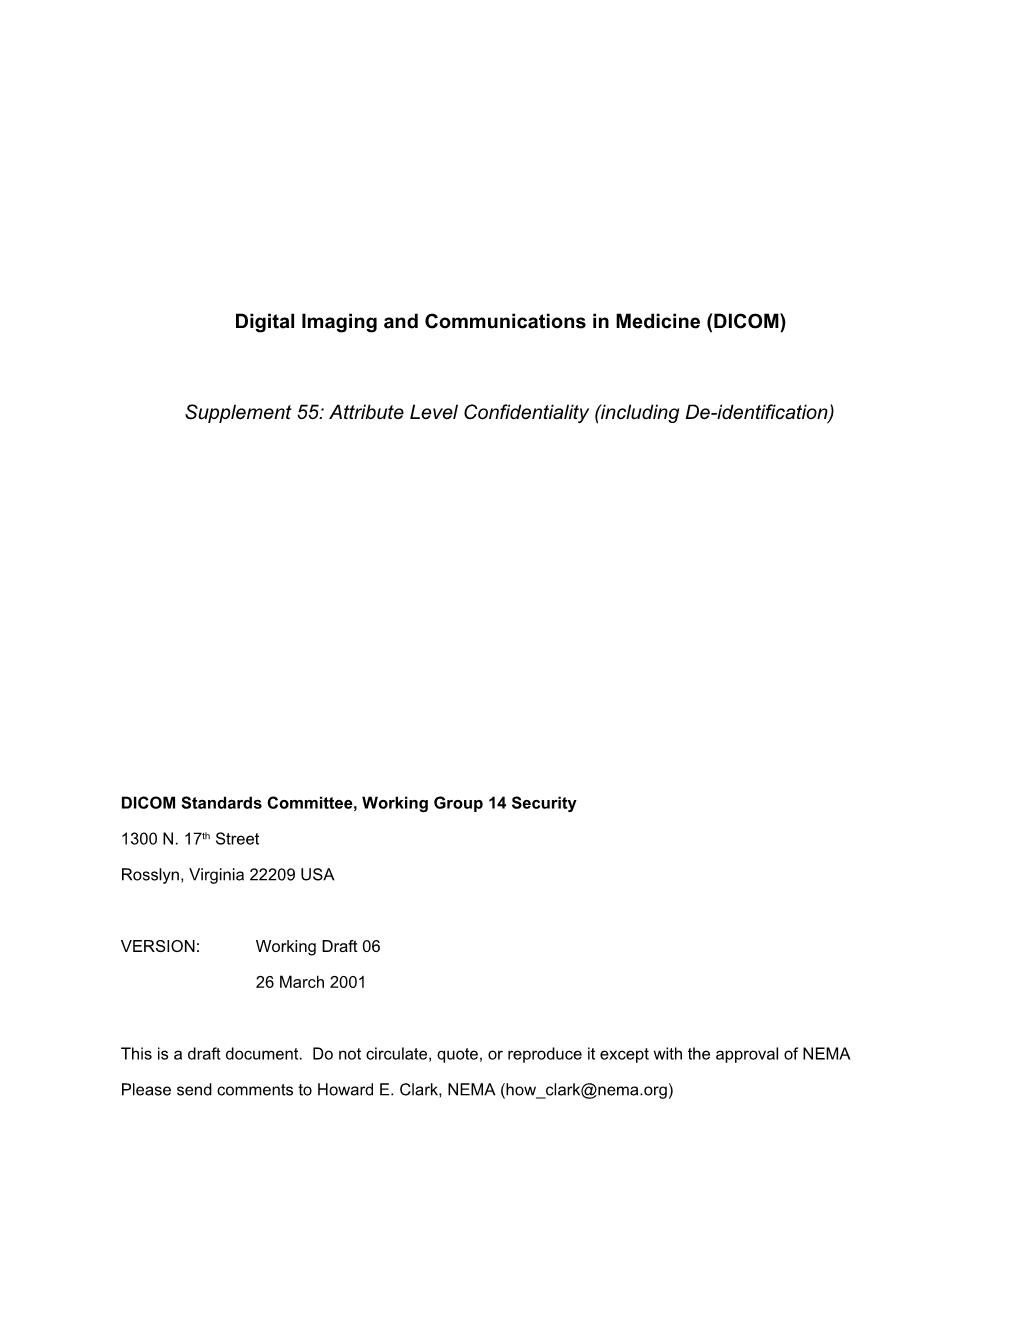 Digital Imaging and Communications in Medicine (DICOM) s1